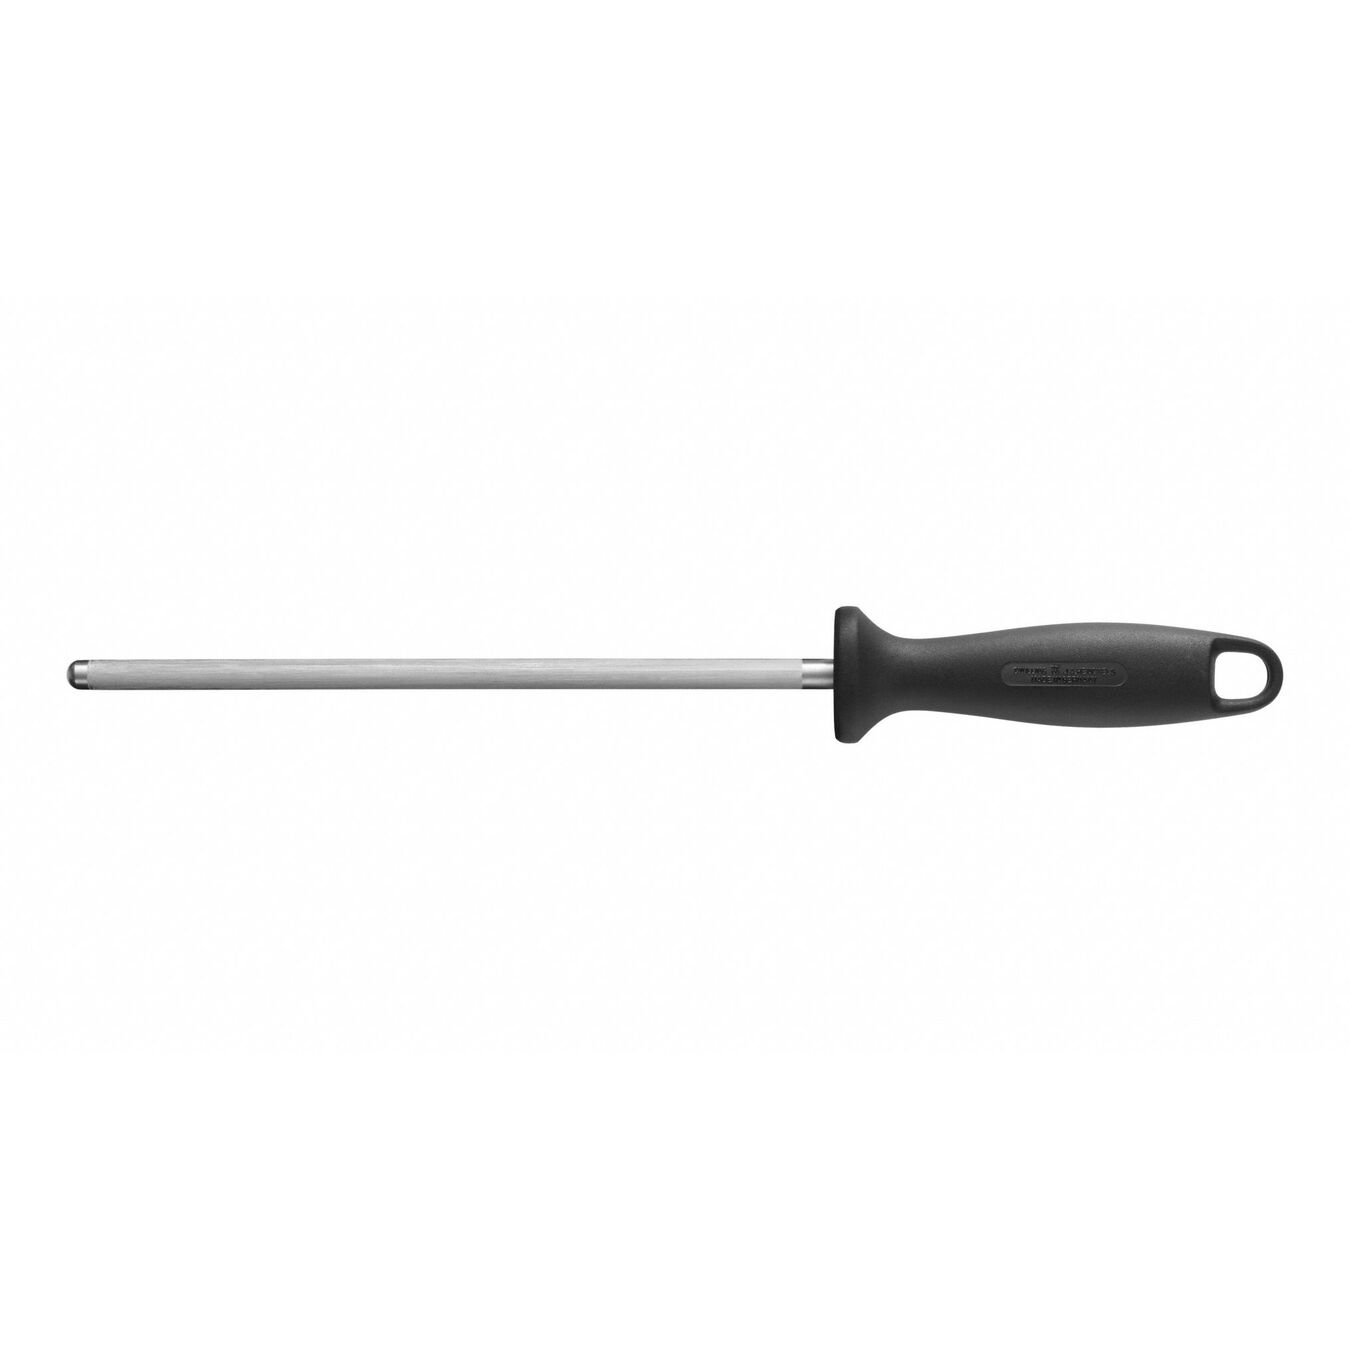 Zwilling 32576-230 Knife Sharpener, Steel Abrasive, Plastic Handle, Black - 2